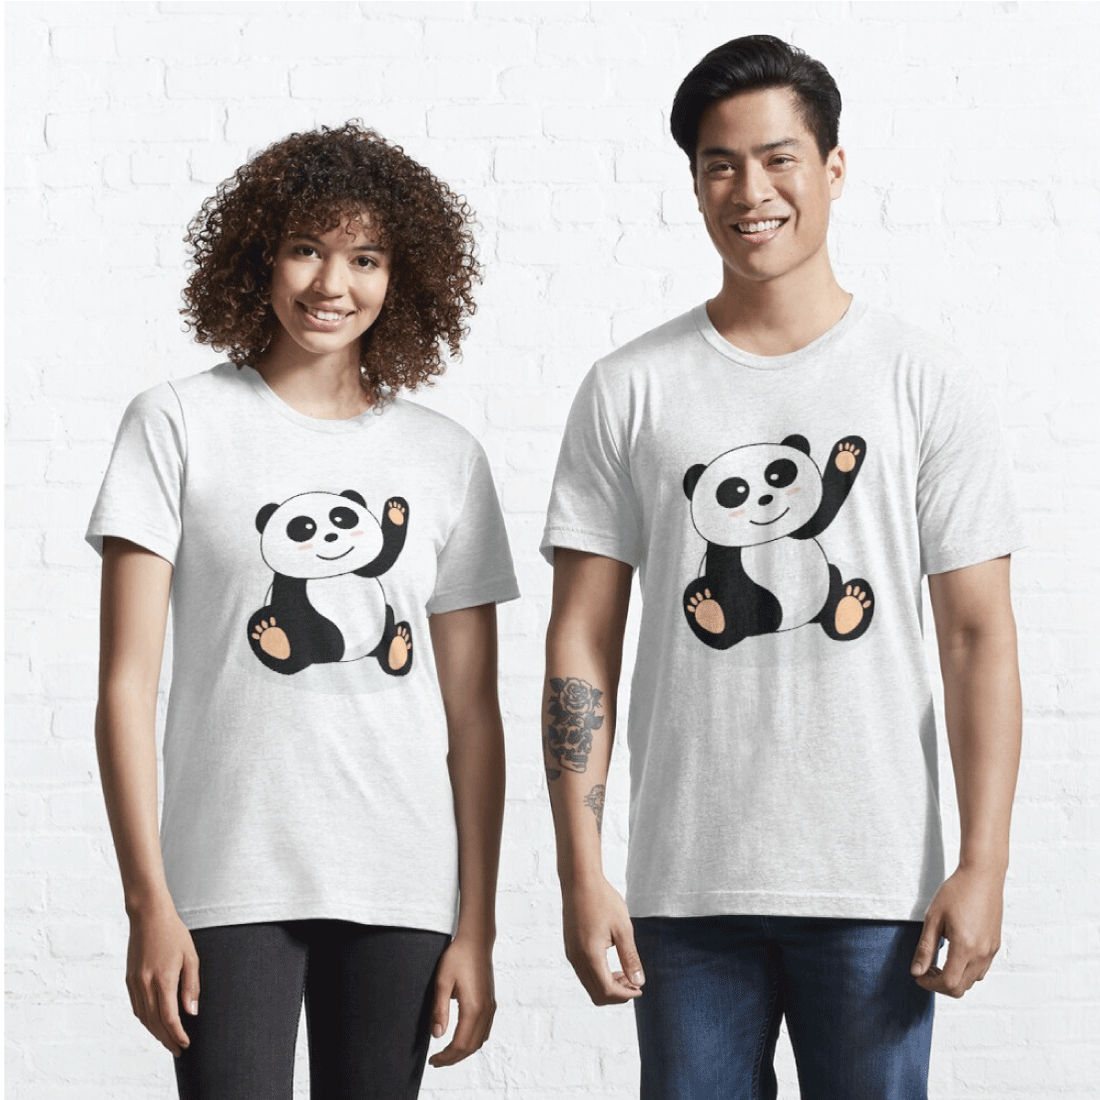 Panda T-shirt Design.